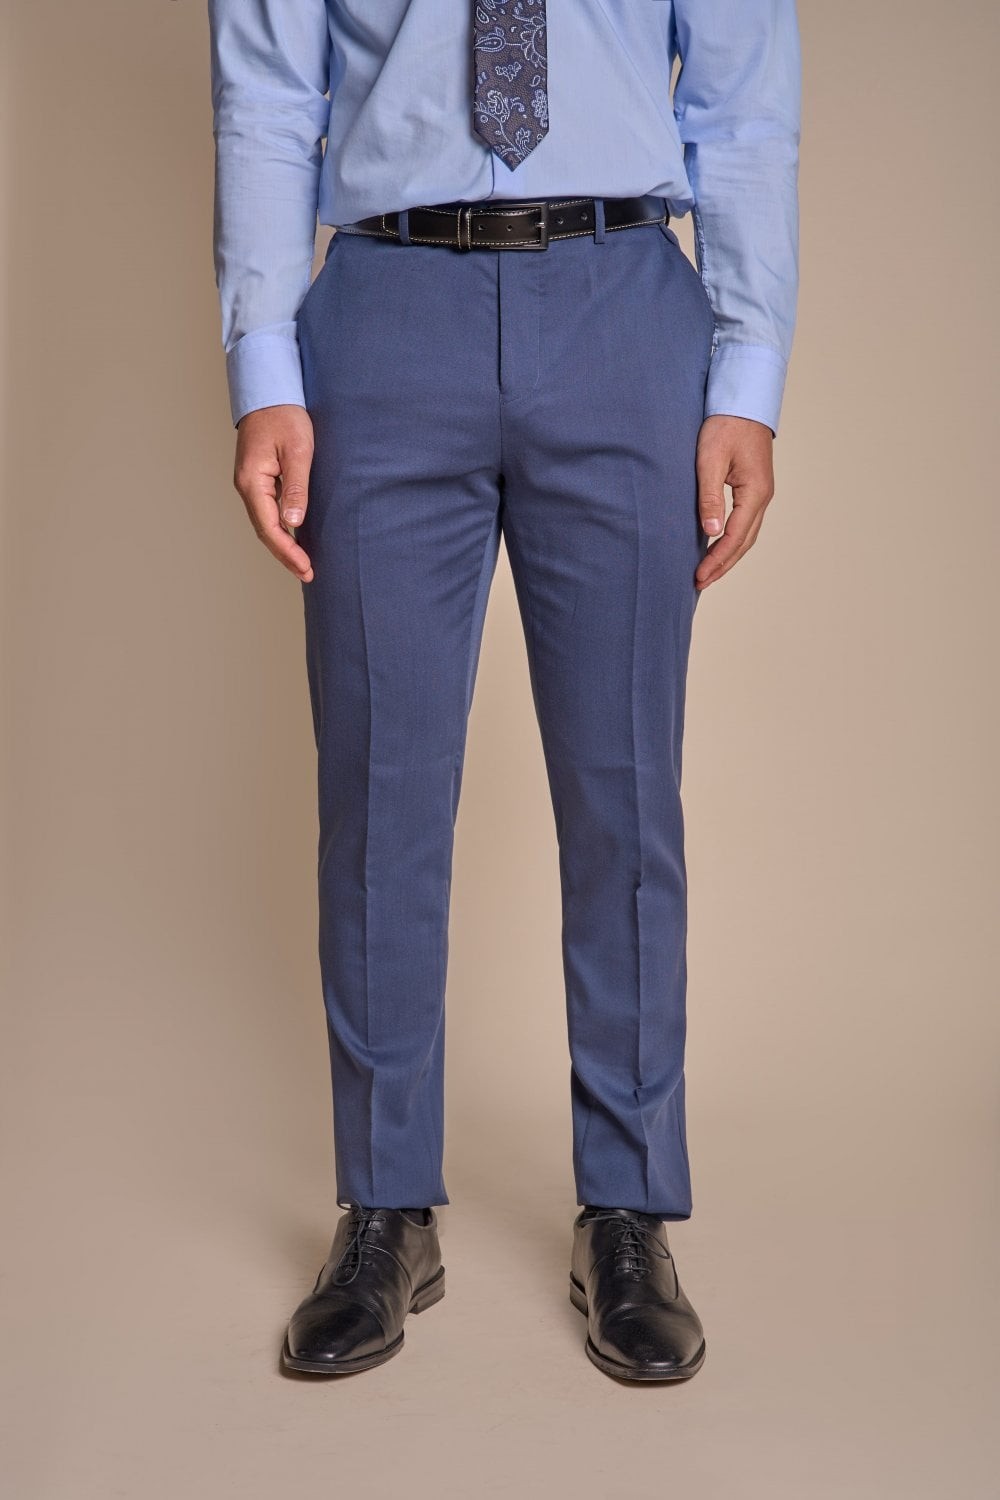 Men's Slim Fit Blue Formal Trousers- SPECTER